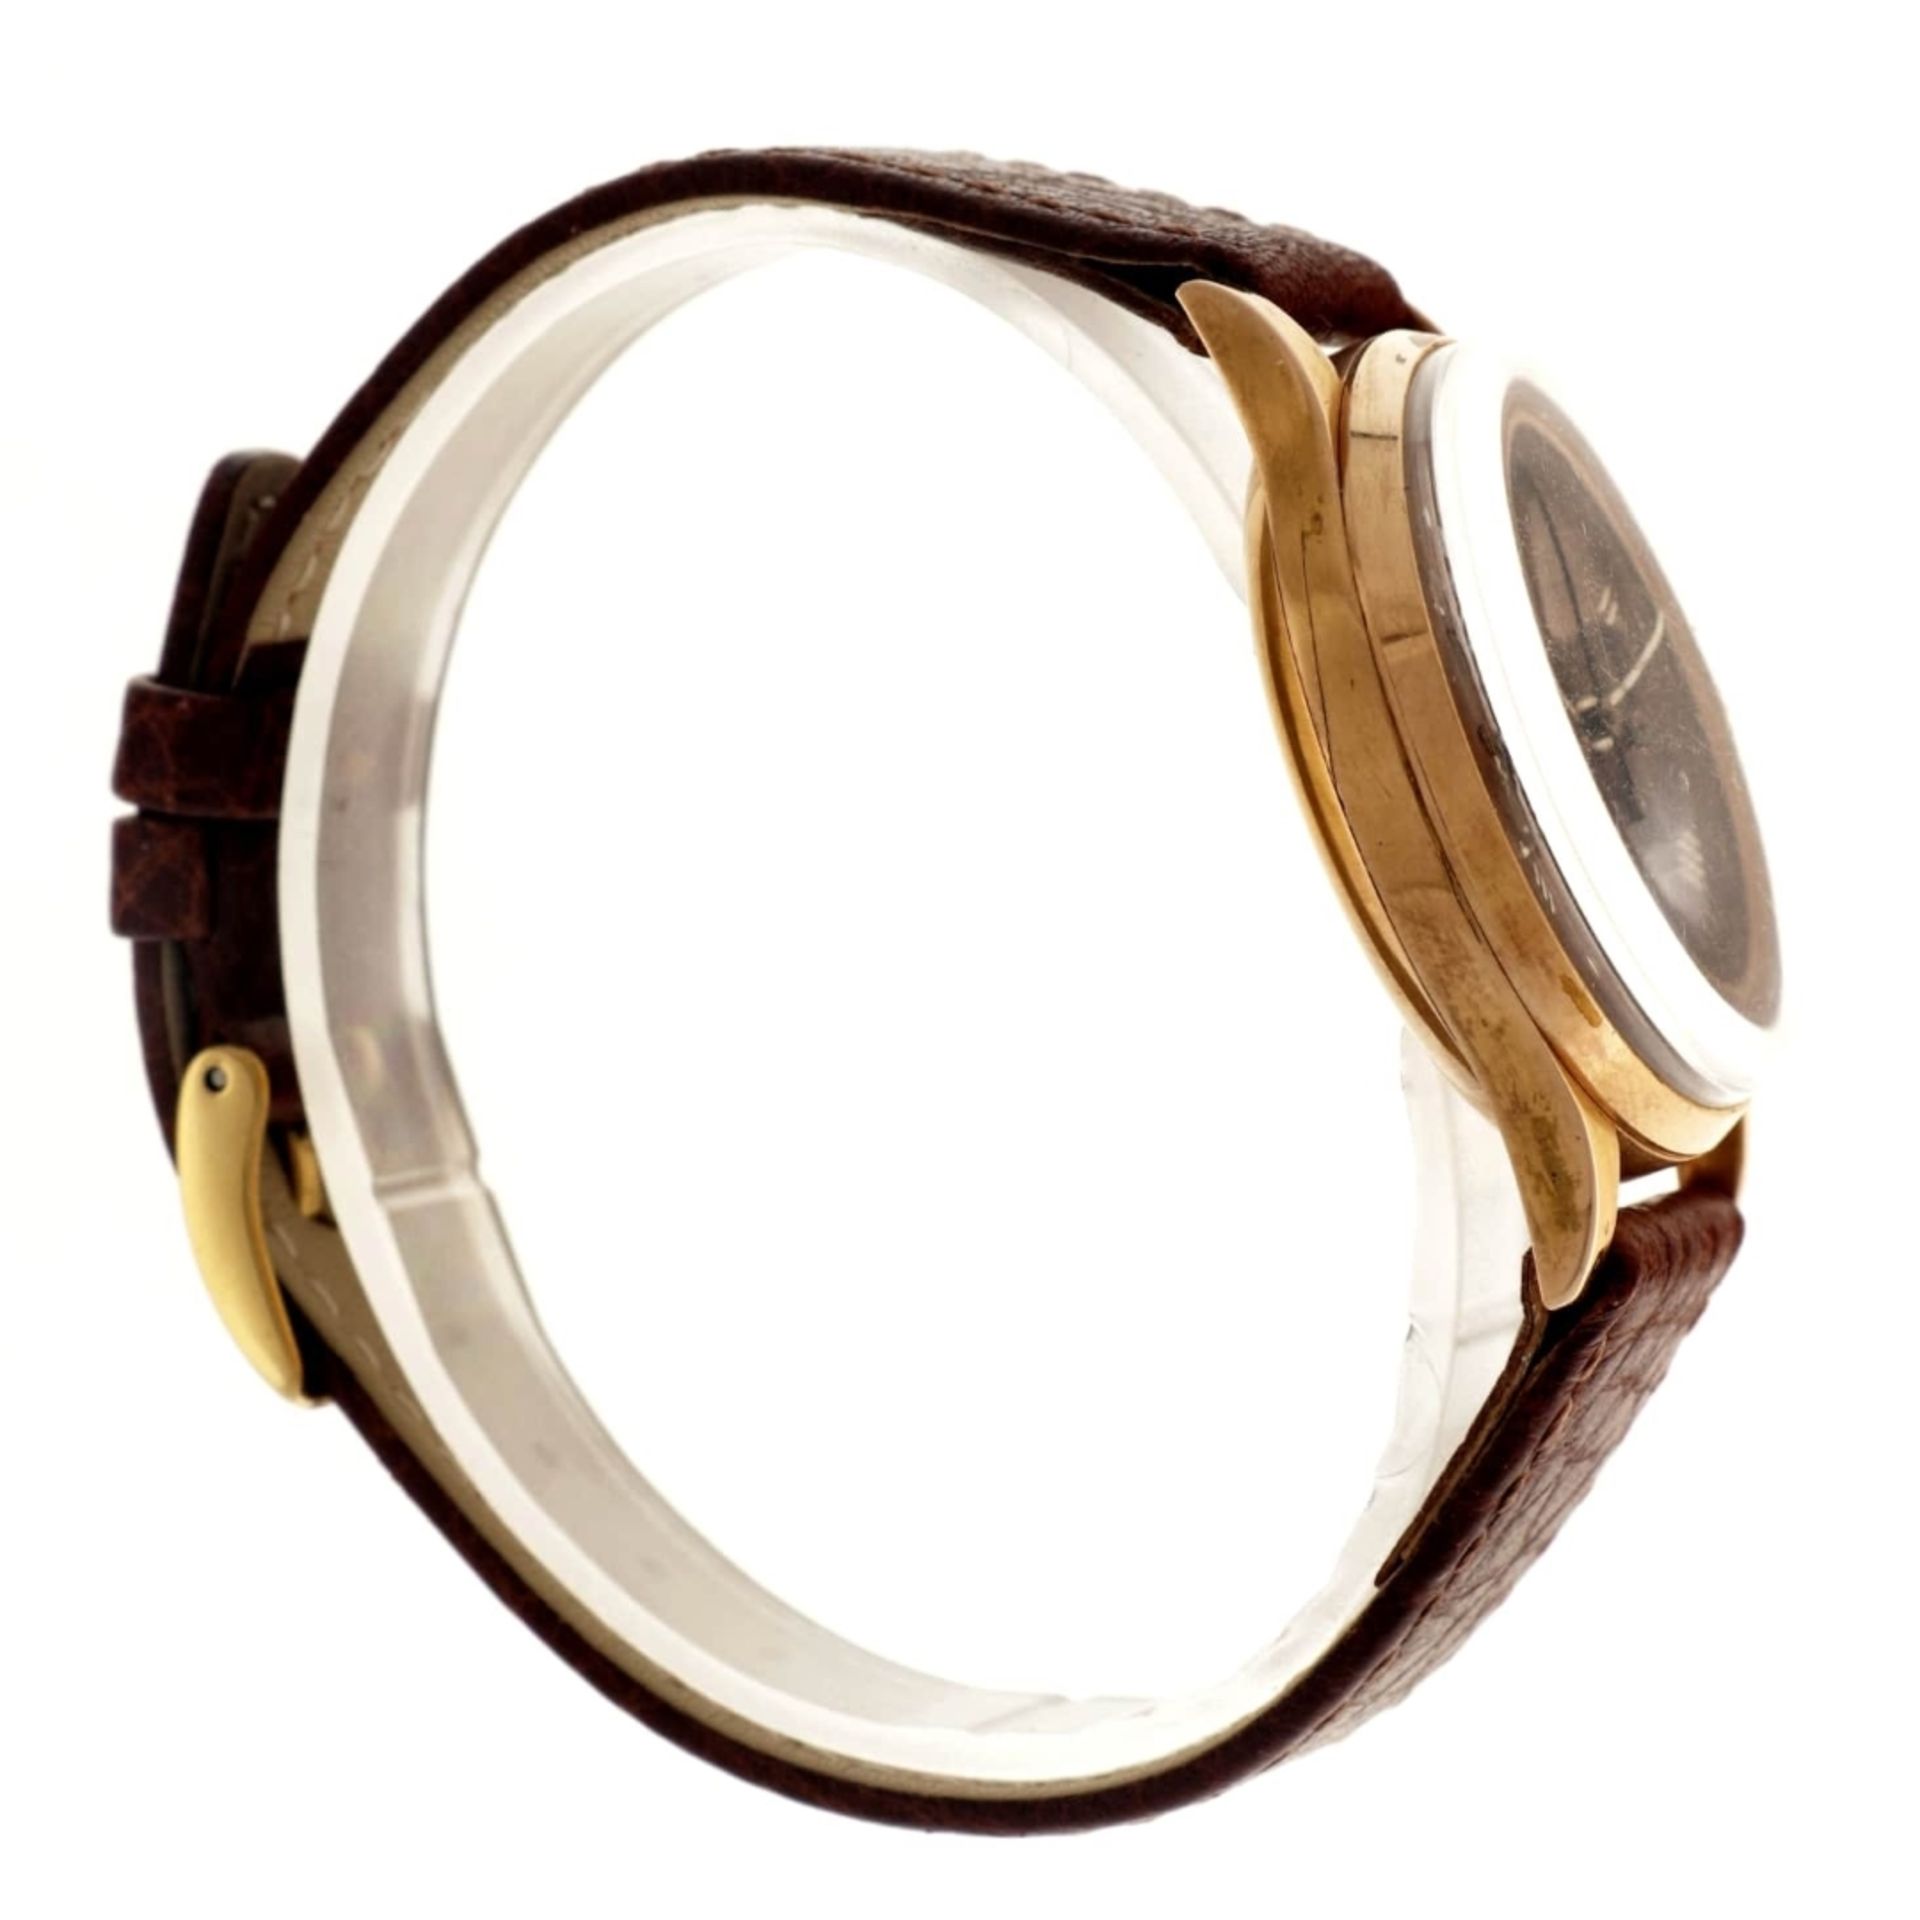 No Reserve - Baume & Mercier vintage 18K. chronograph - Men's watch. - Image 4 of 6